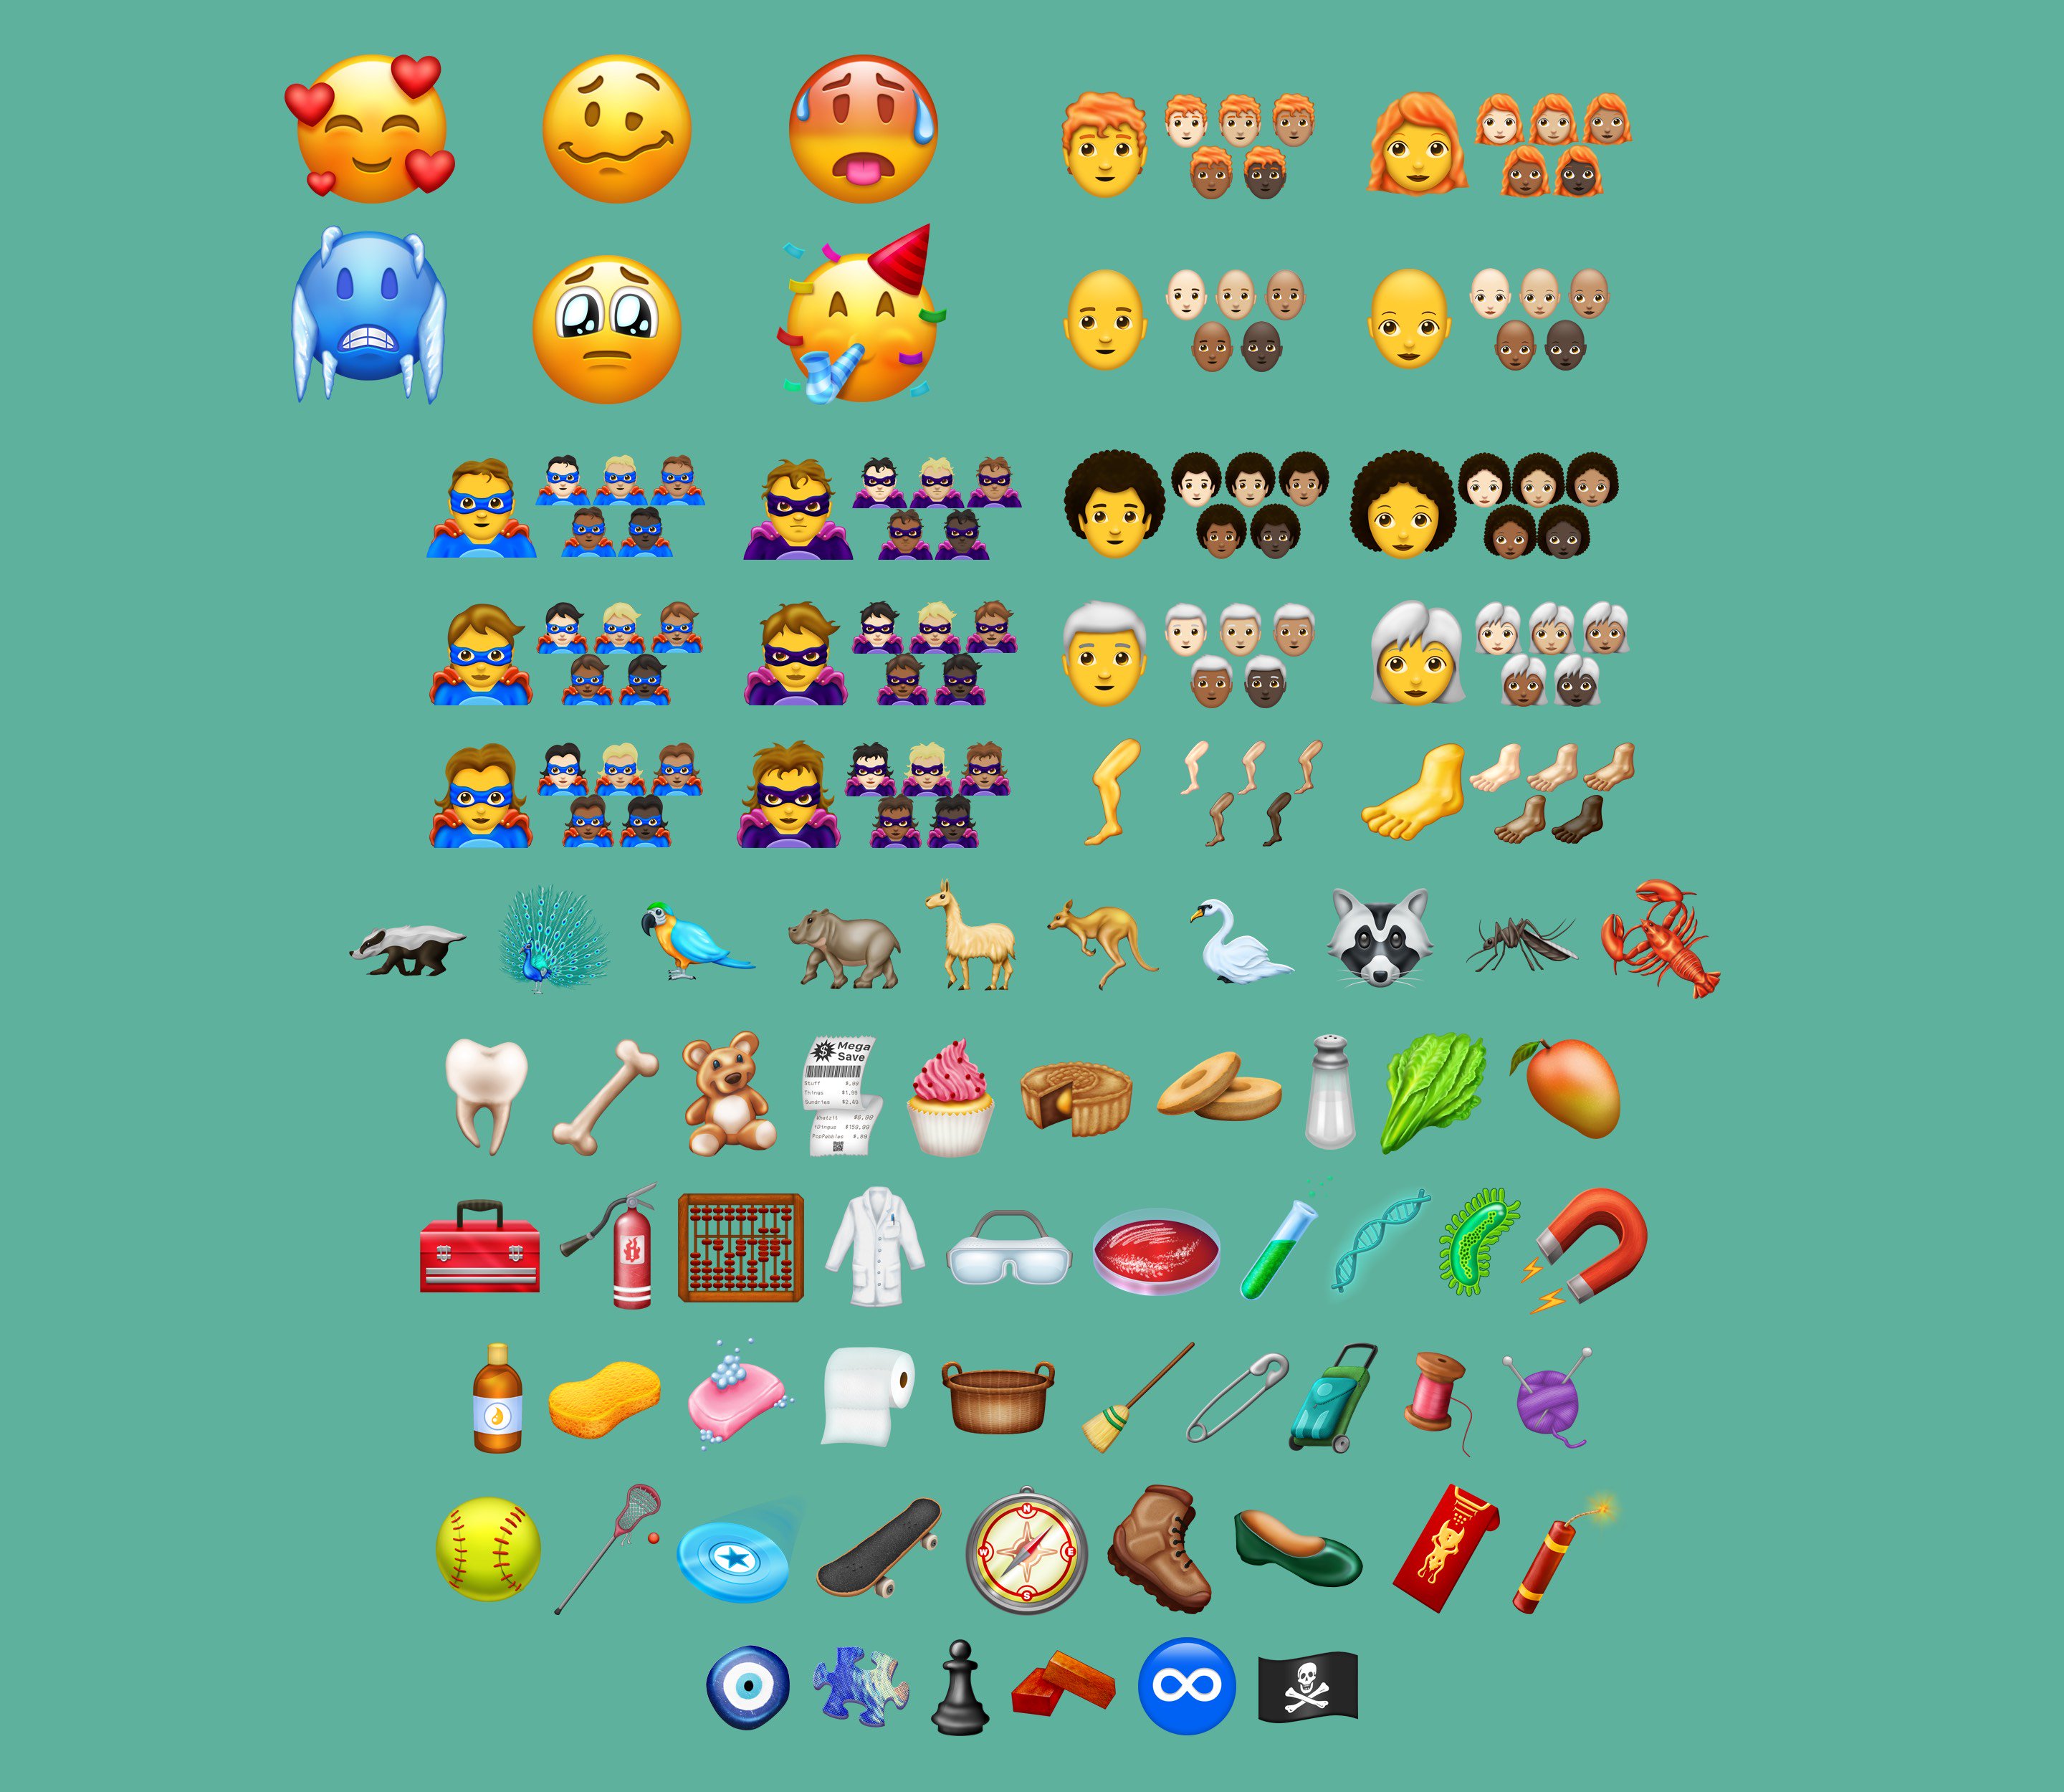 emojipedia-11-1-sample-images-2018-emoji-11